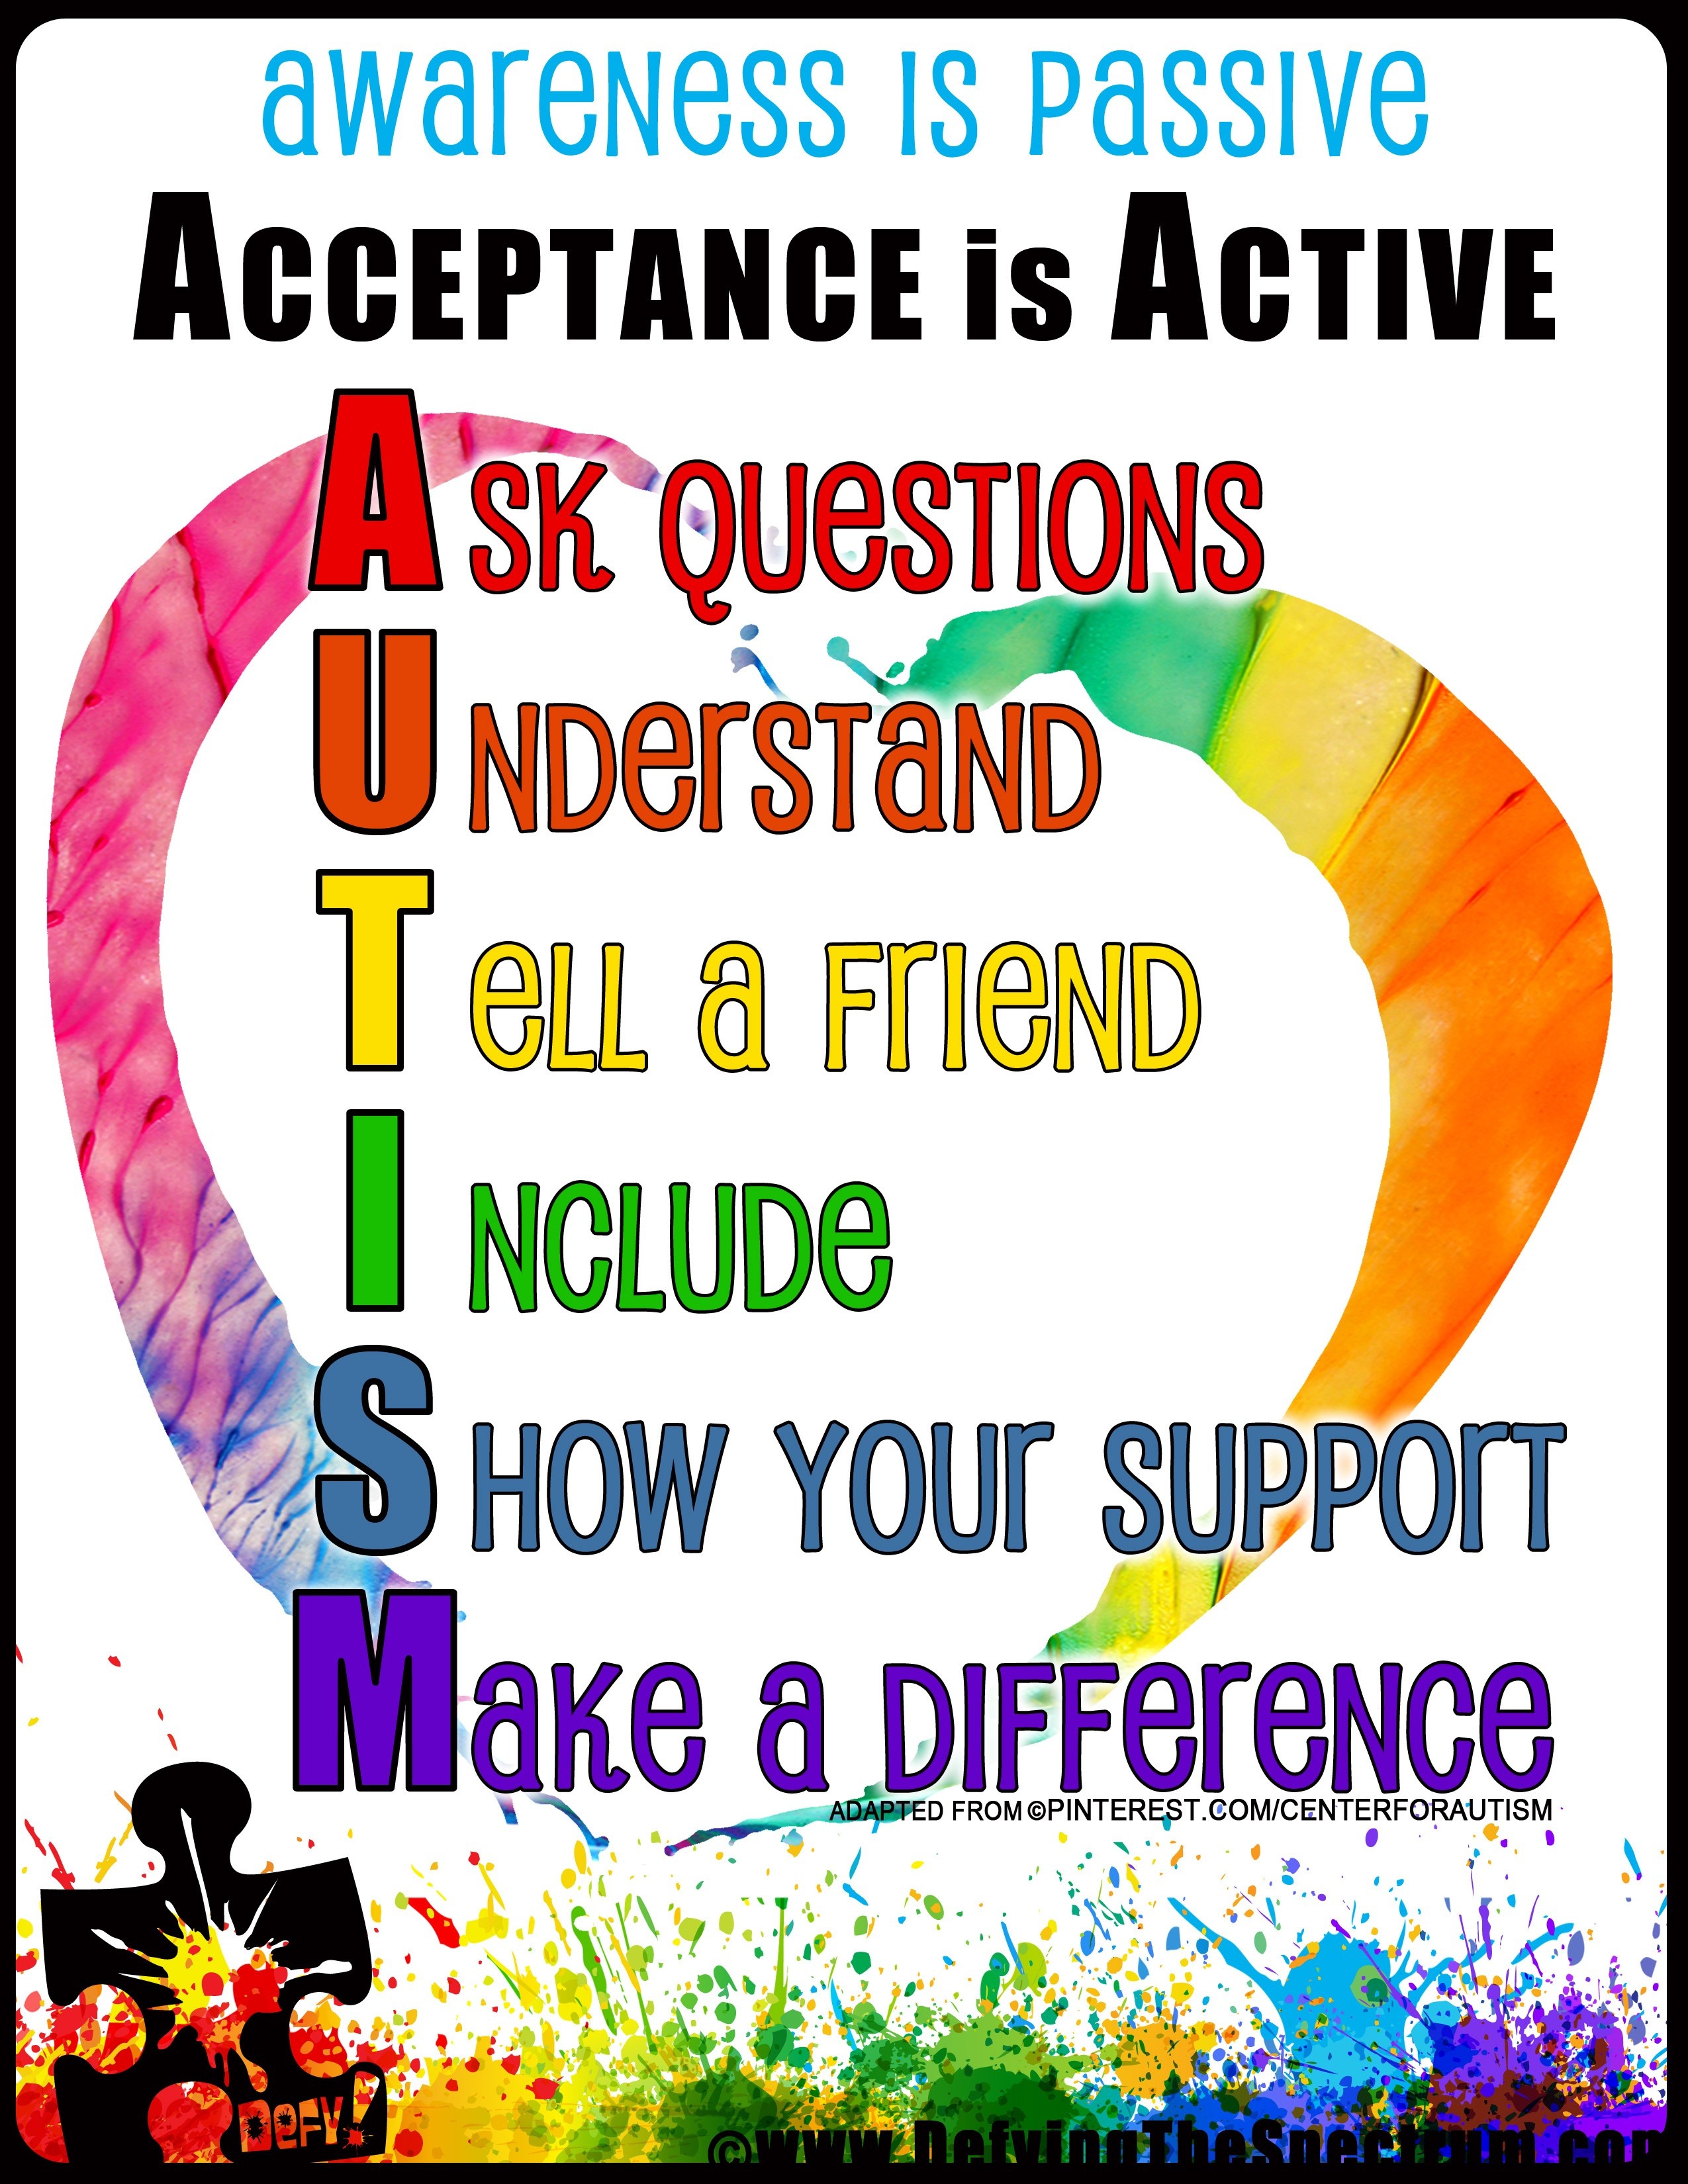 Free Autism Awareness Printables - Free Printable Autism Awareness Posters